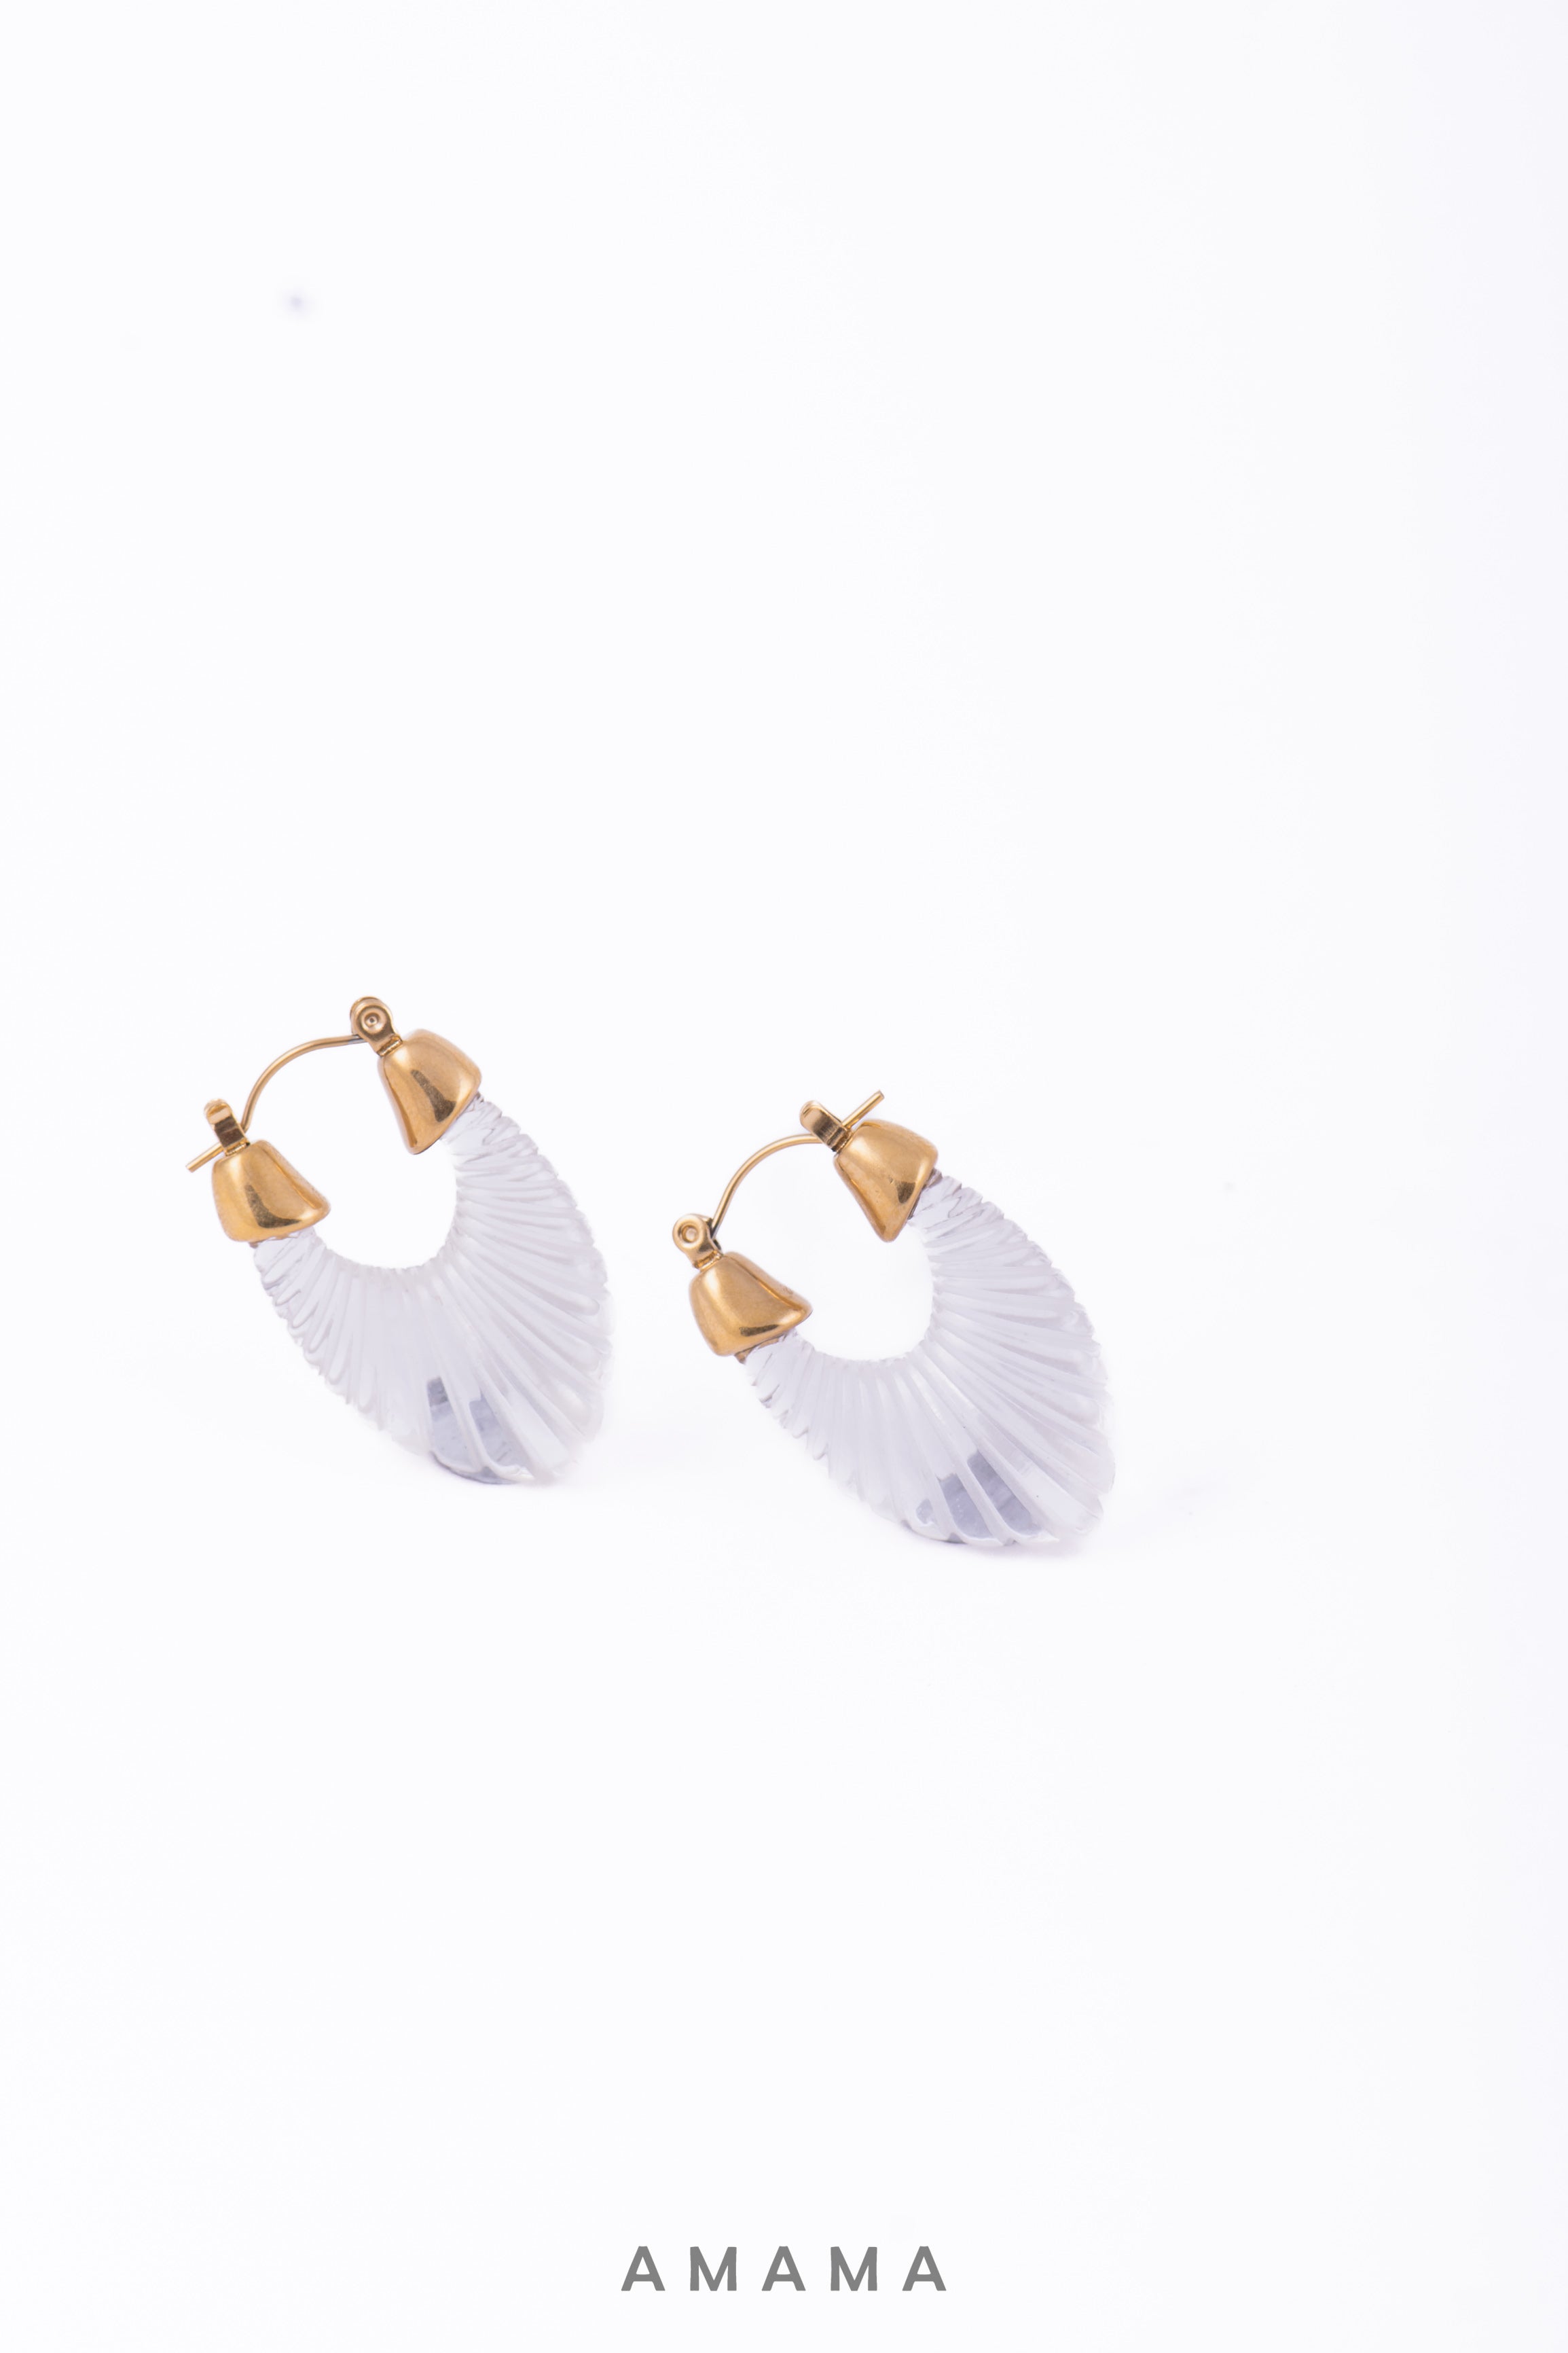 Amama,Emica Earrings in White